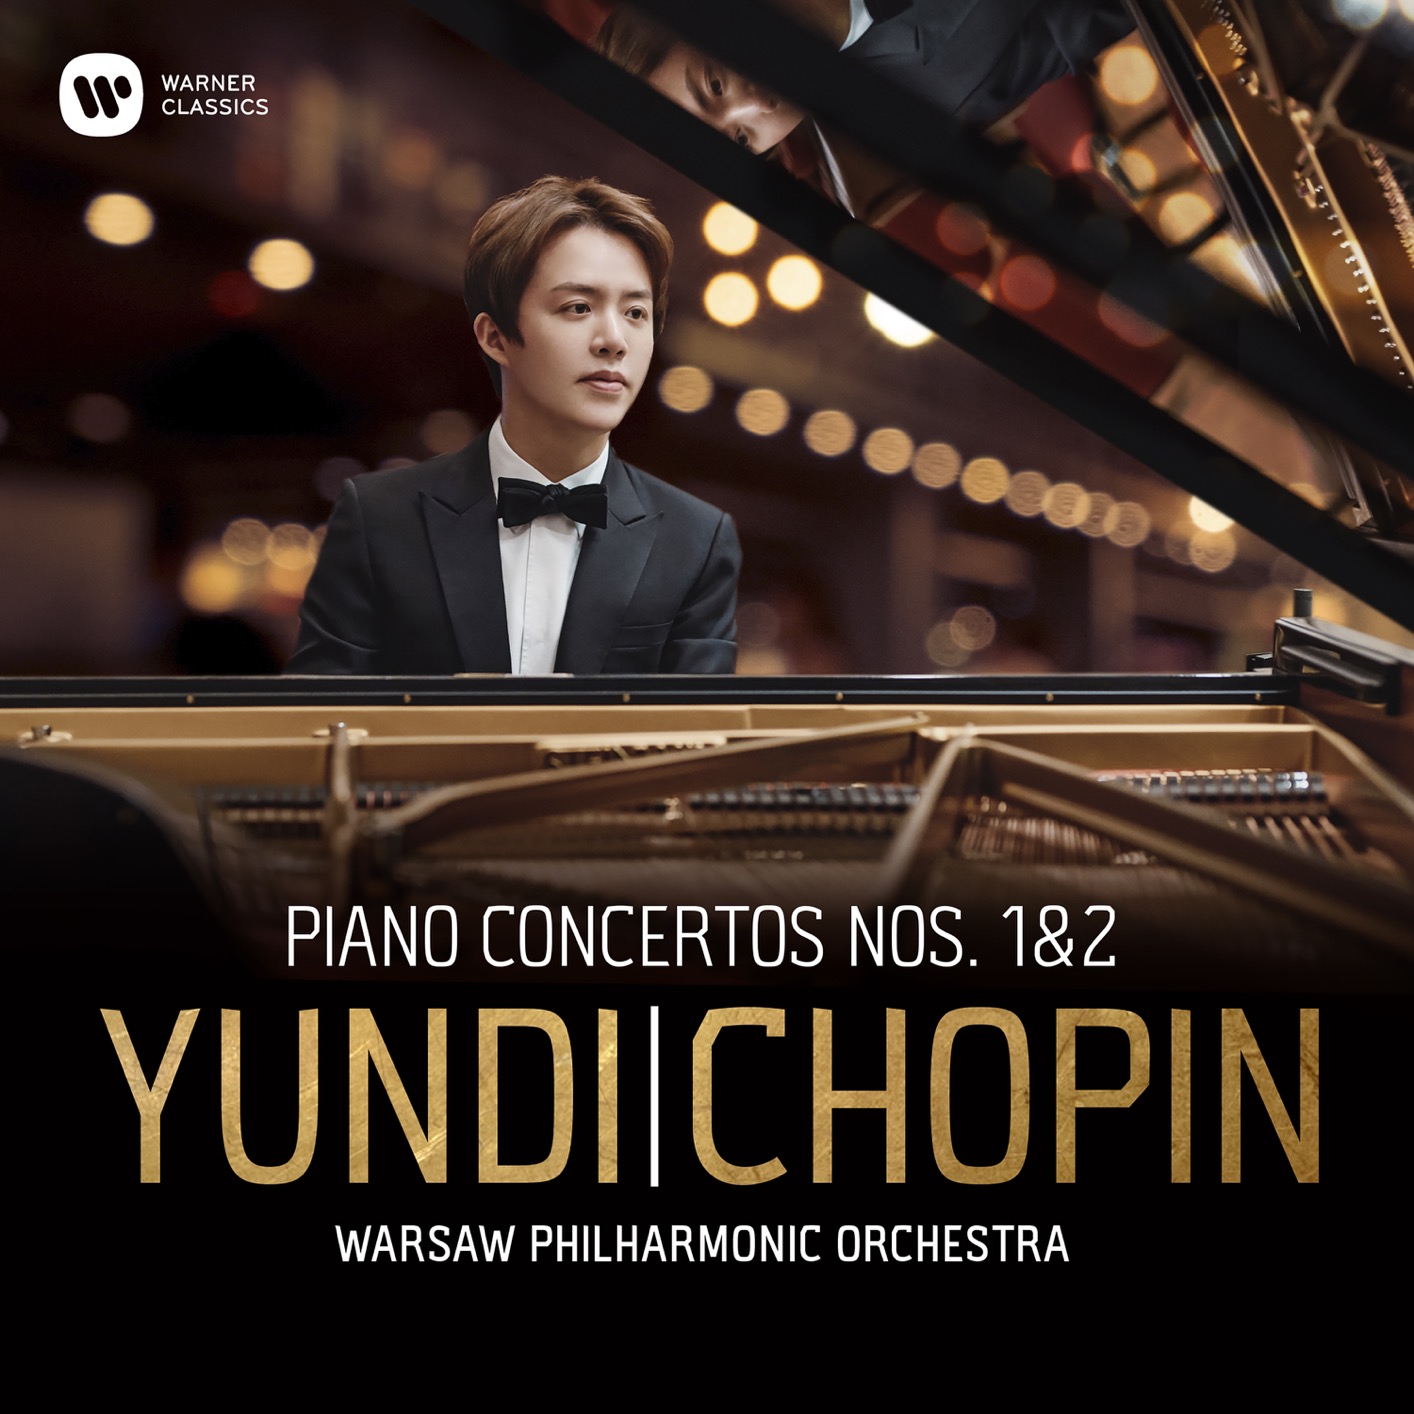 YUNDI – Chopin: Piano Concertos Nos 1 & 2 (2020) [FLAC 24bit/96kHz]